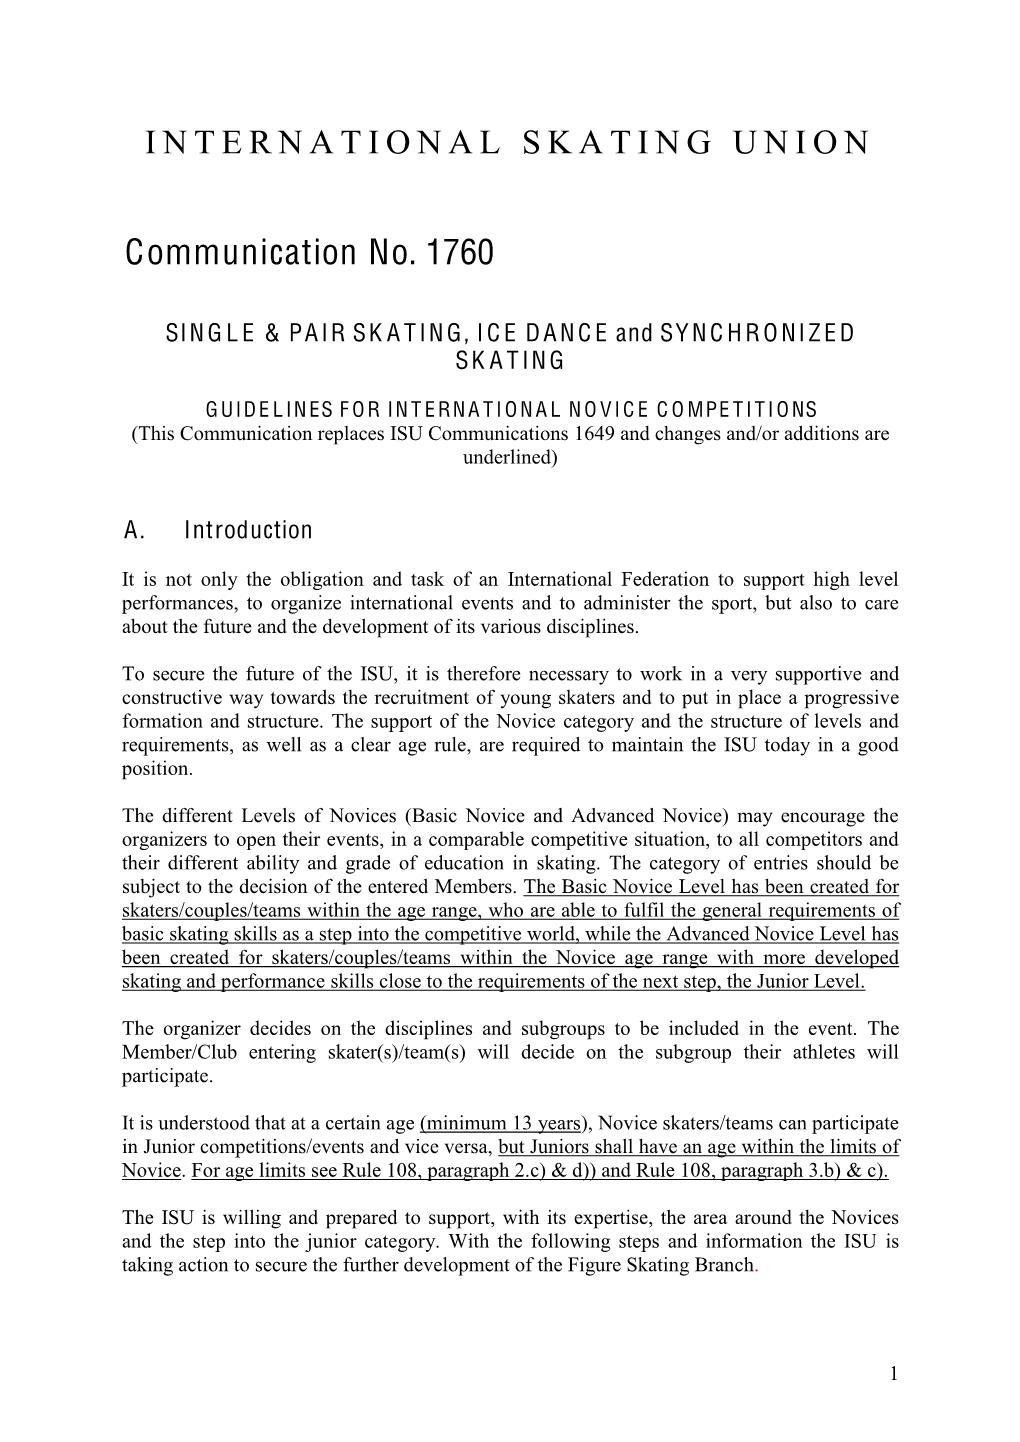 INTERNATIONAL SKATING UNION Communication No. 1760